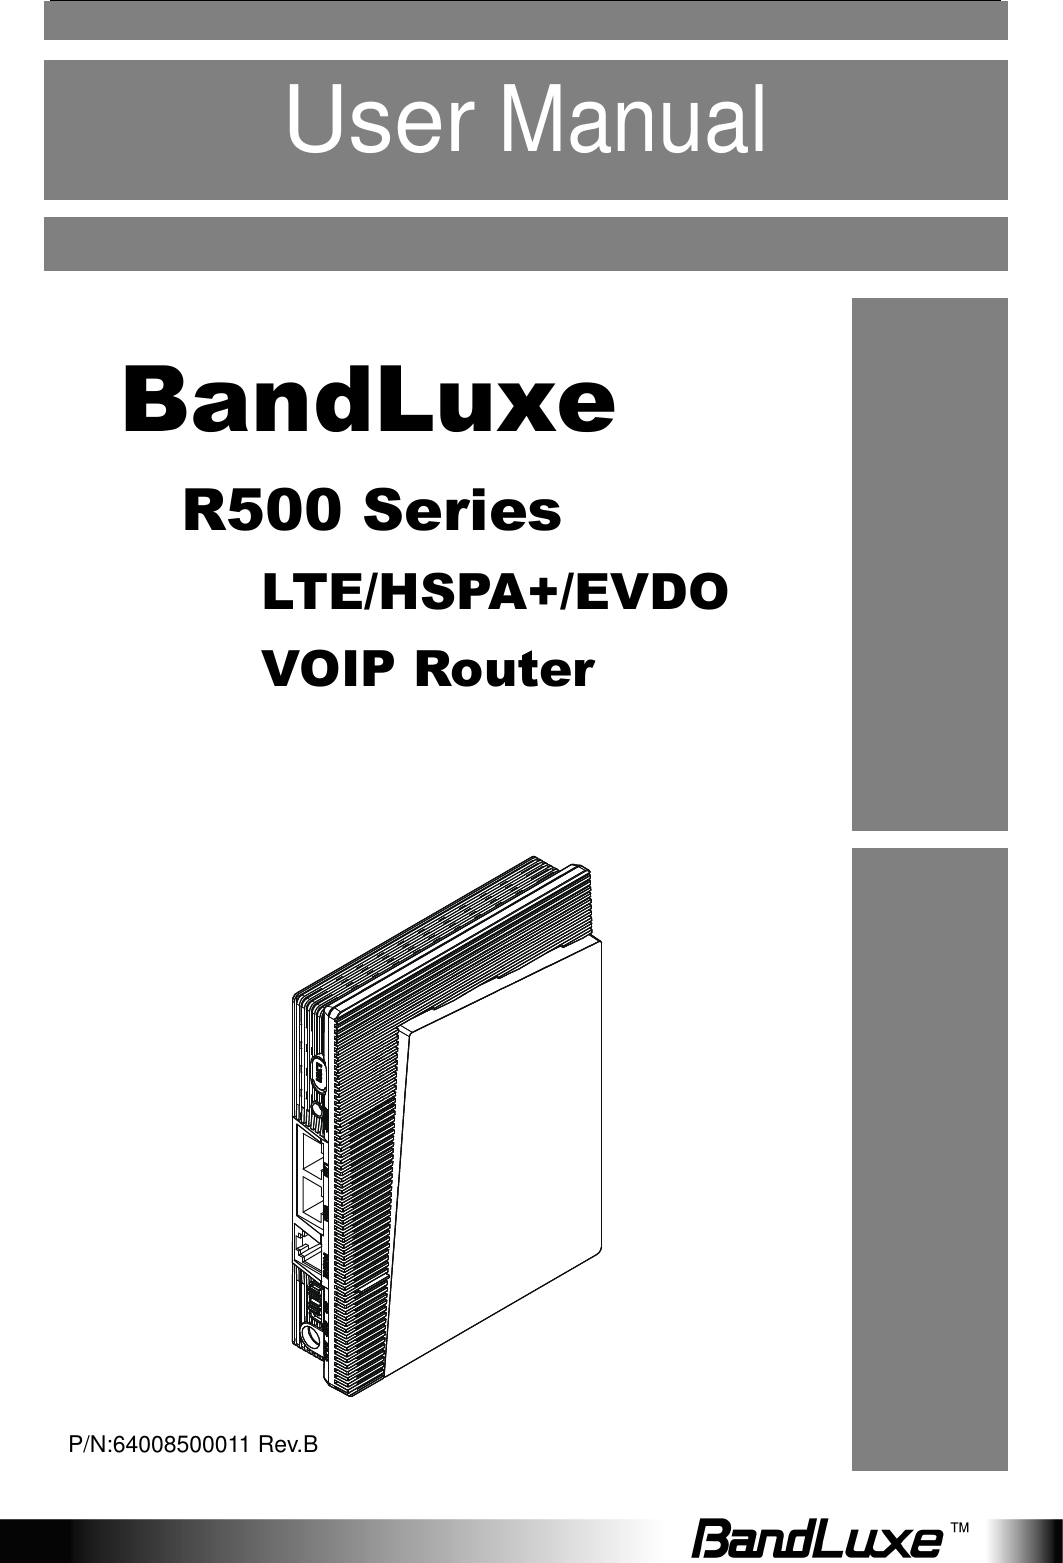     User Manual          BandLuxe R500 Series   LTE/HSPA+/EVDO   VOIP Router         P/N:64008500011 Rev.B 